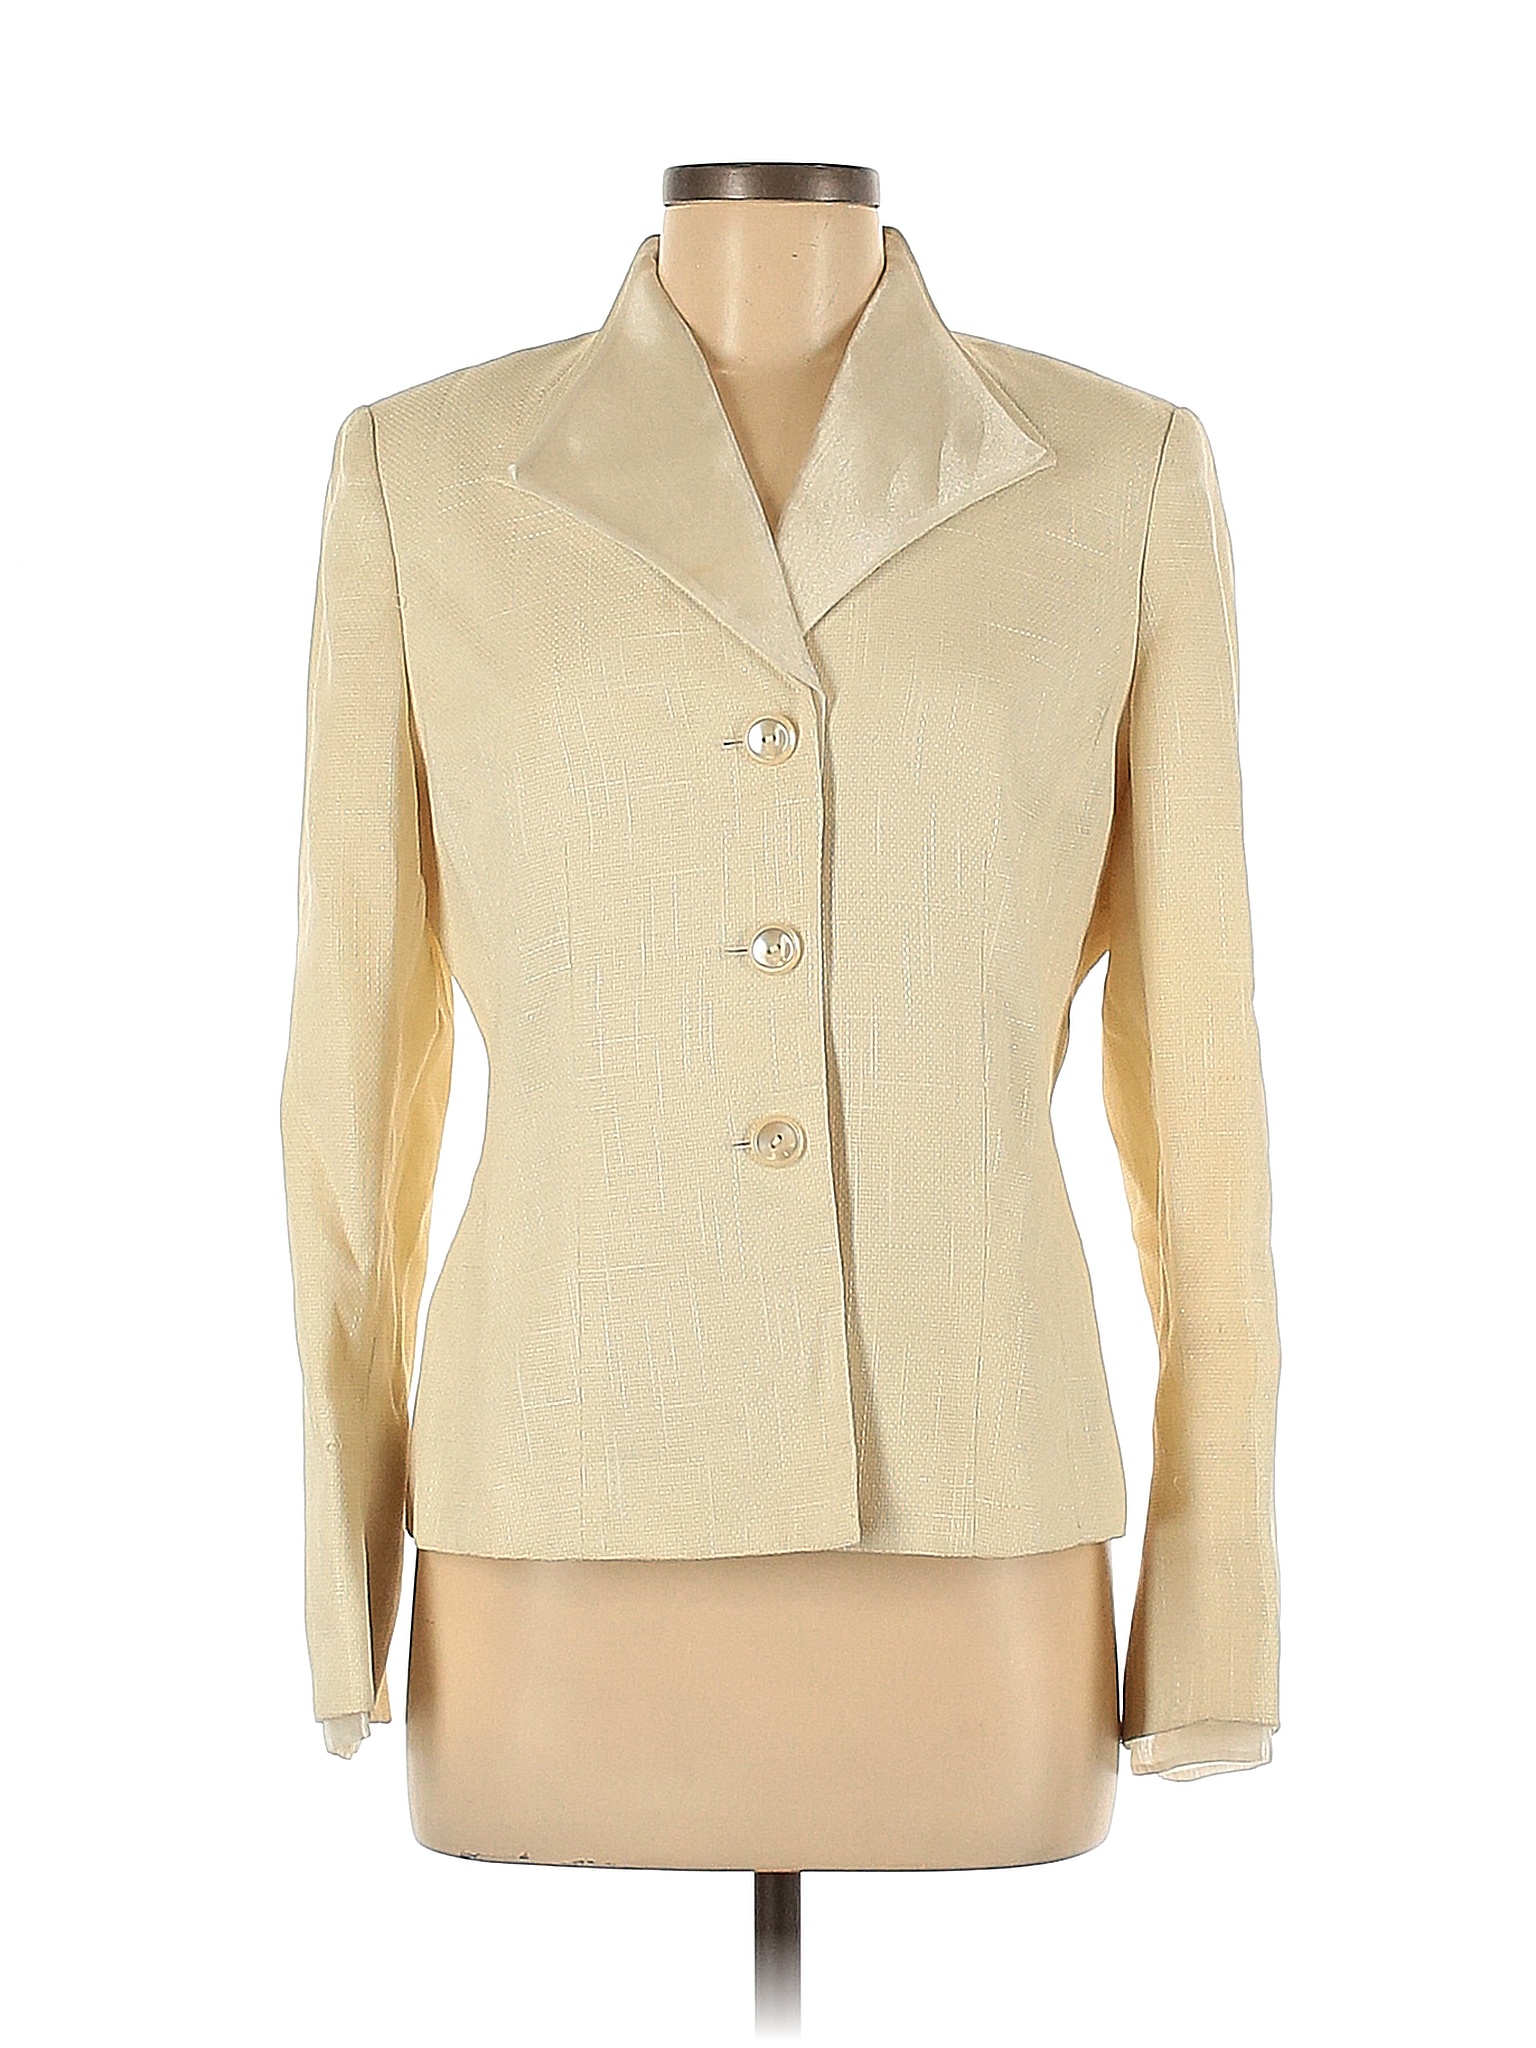 Le Suit Solid Tan Ivory Blazer Size 8 - 84% off | thredUP